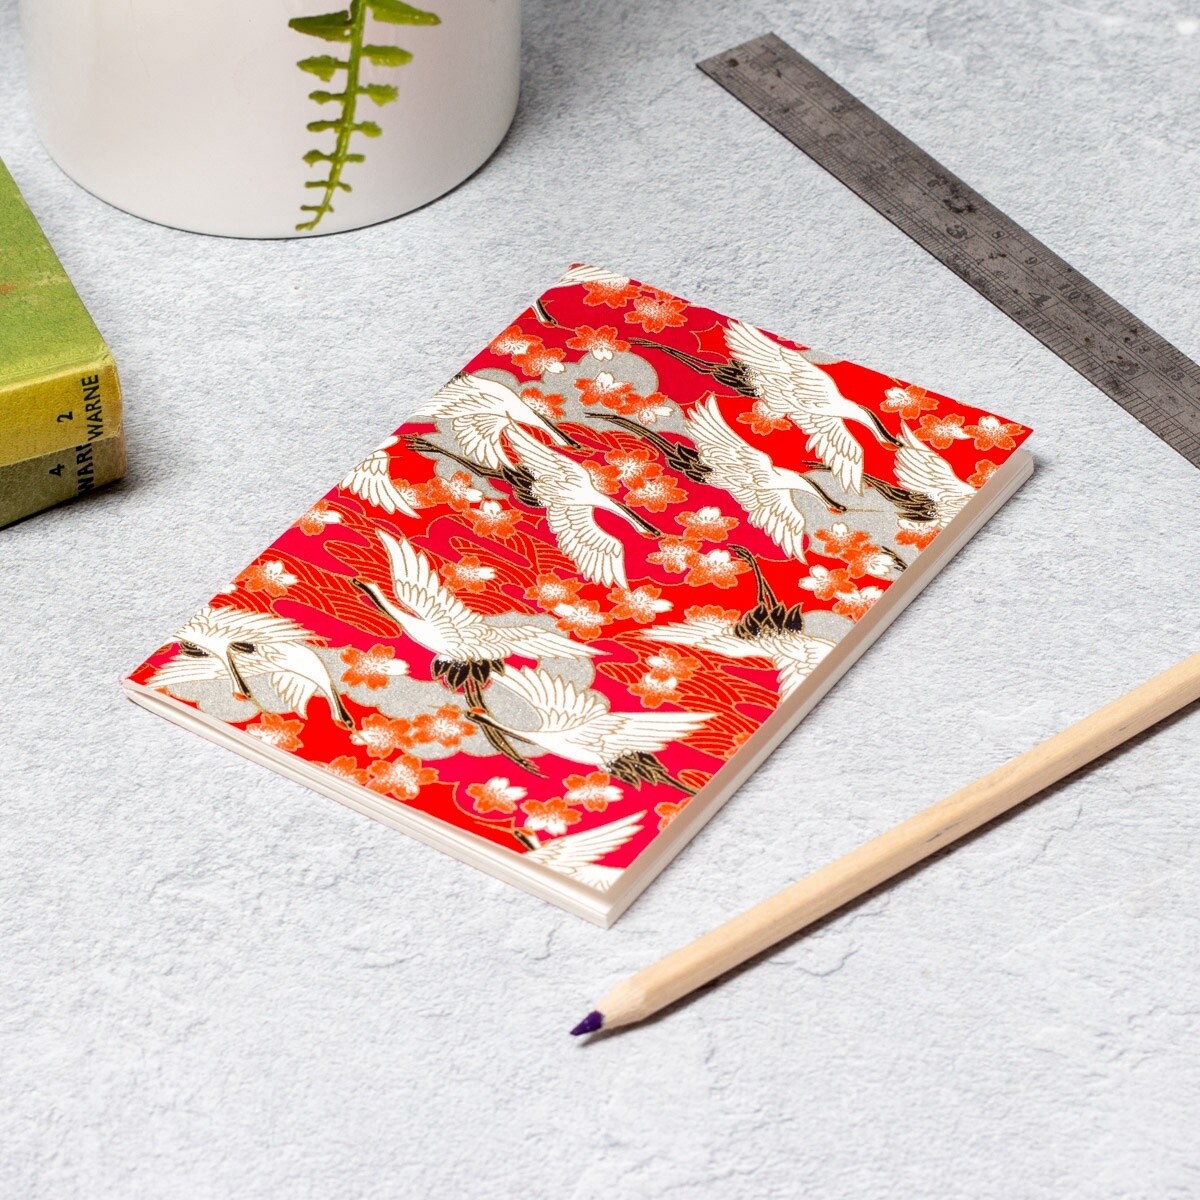 Essential Notebook - Red Blossom/Cranes by Esmie